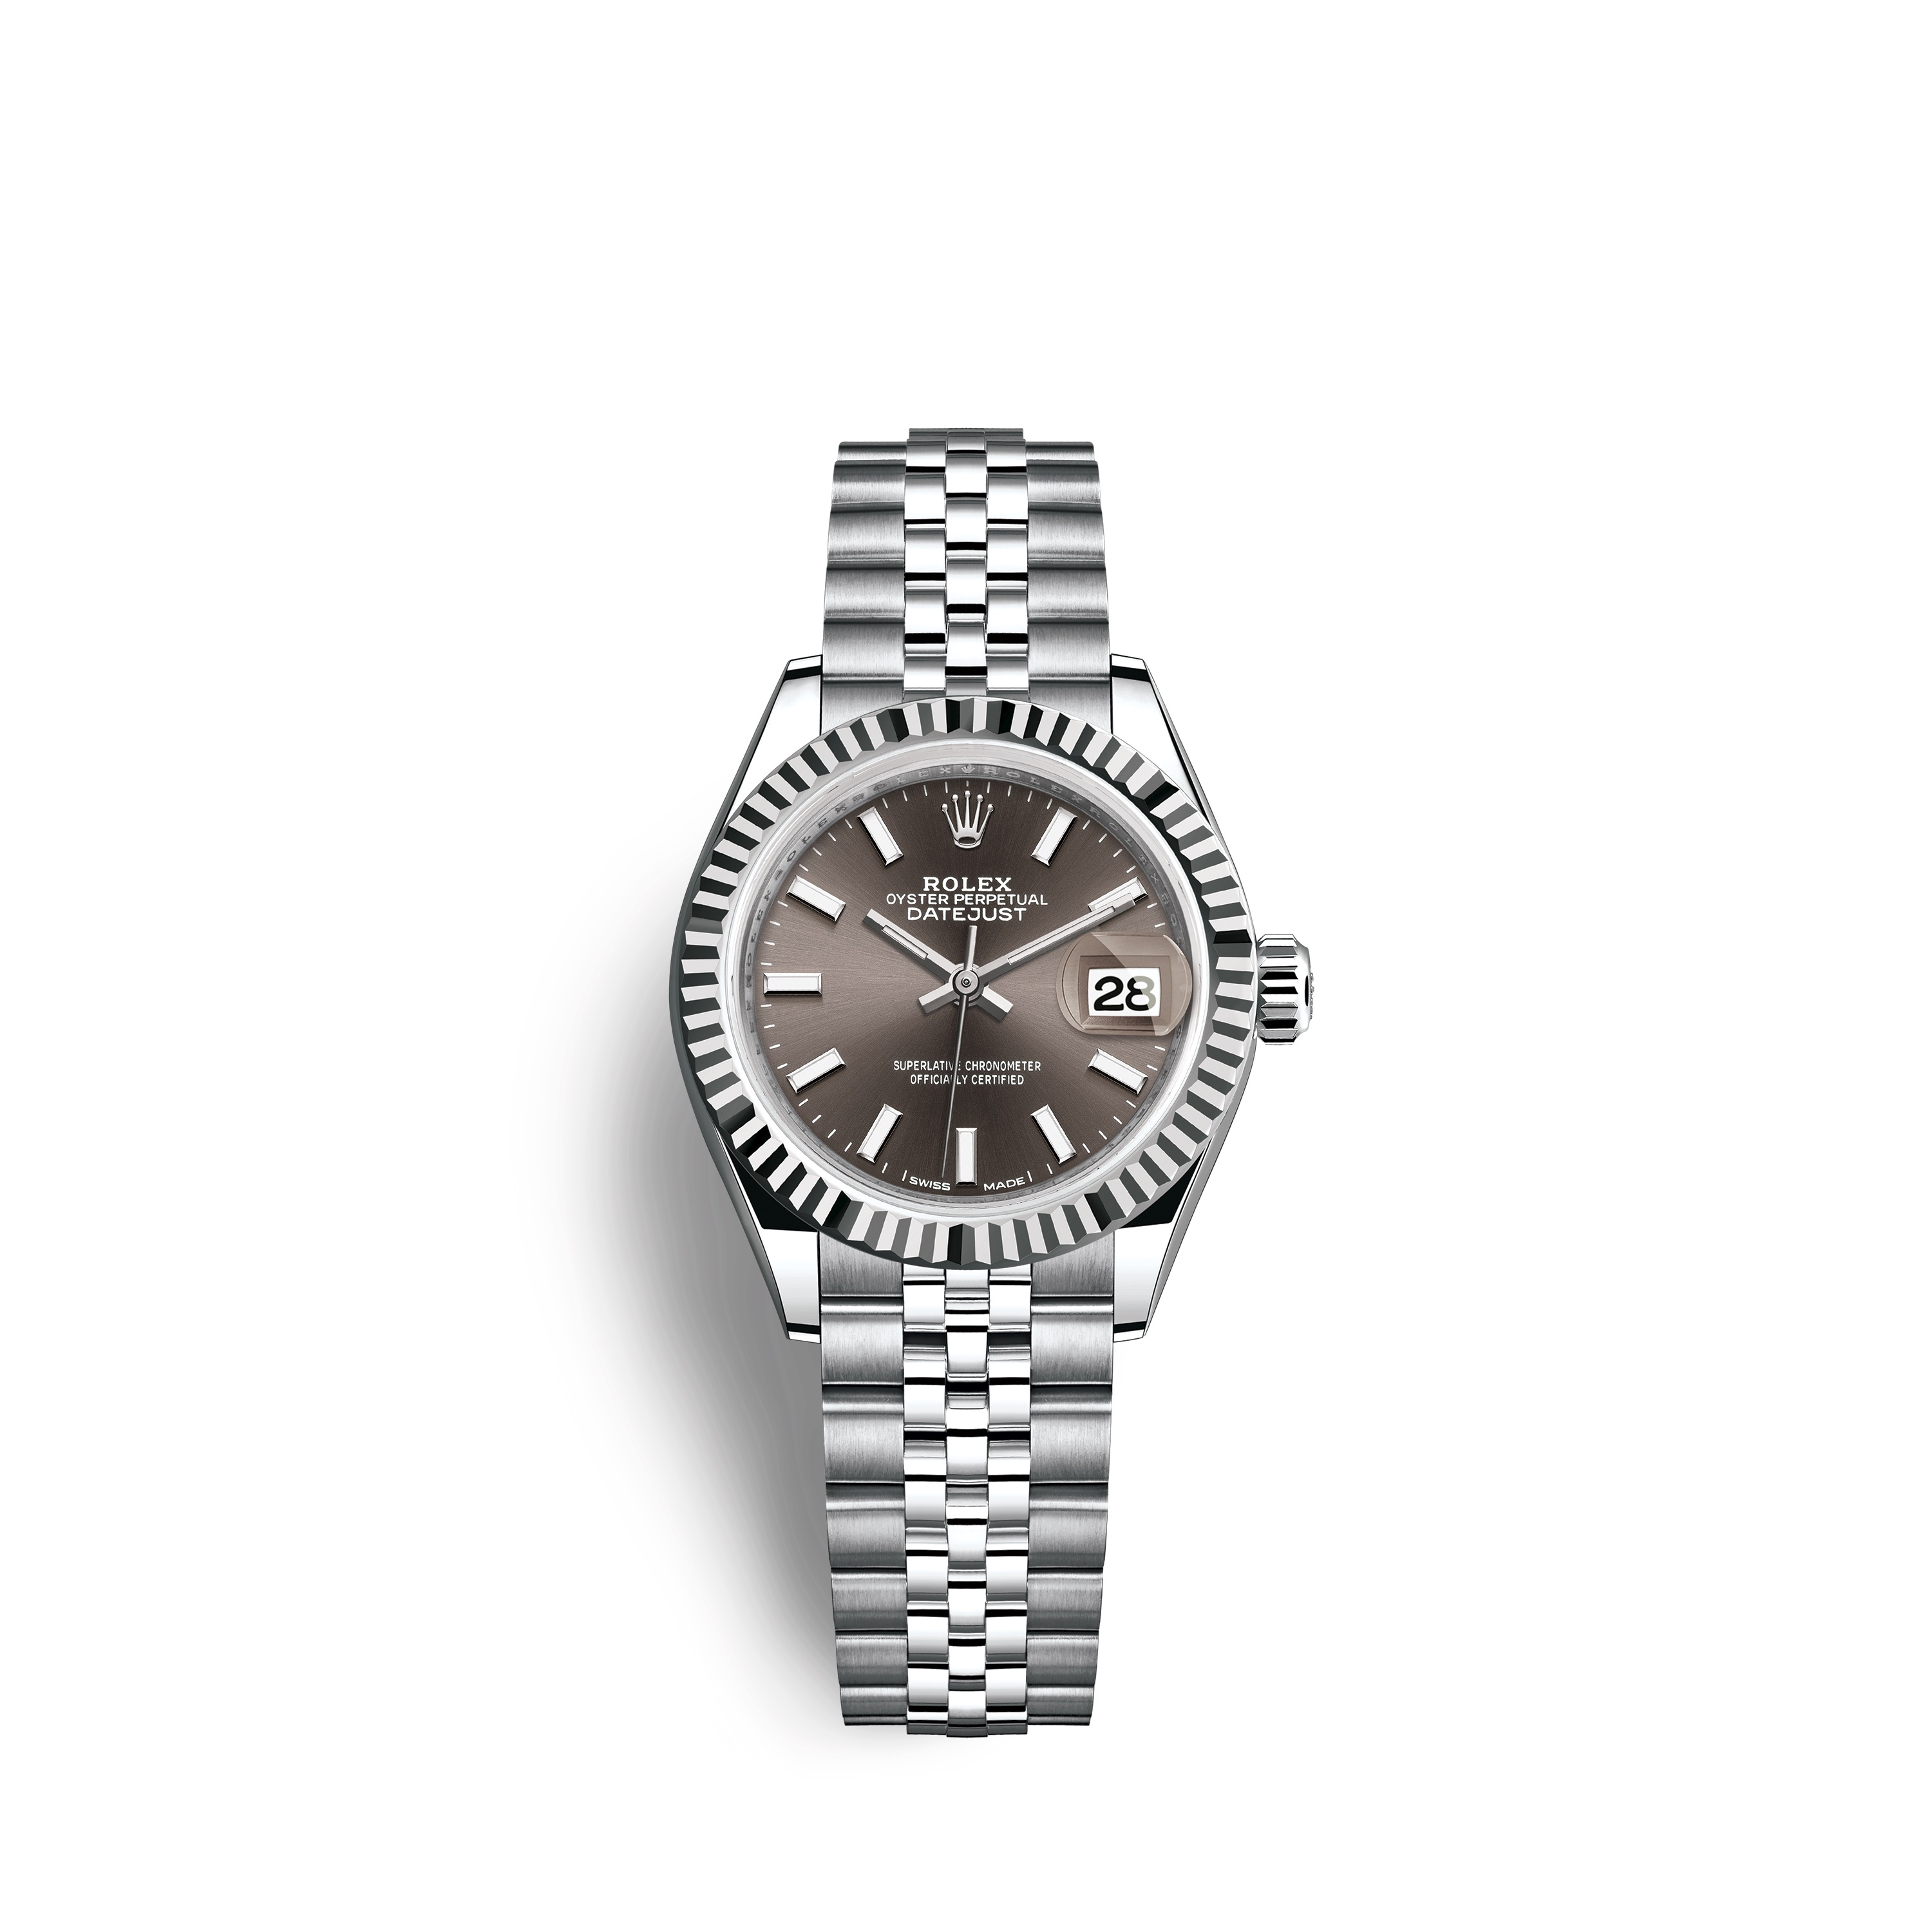 Lady-Datejust 28 279174 White Gold & Stainless Steel Watch (Dark Grey)